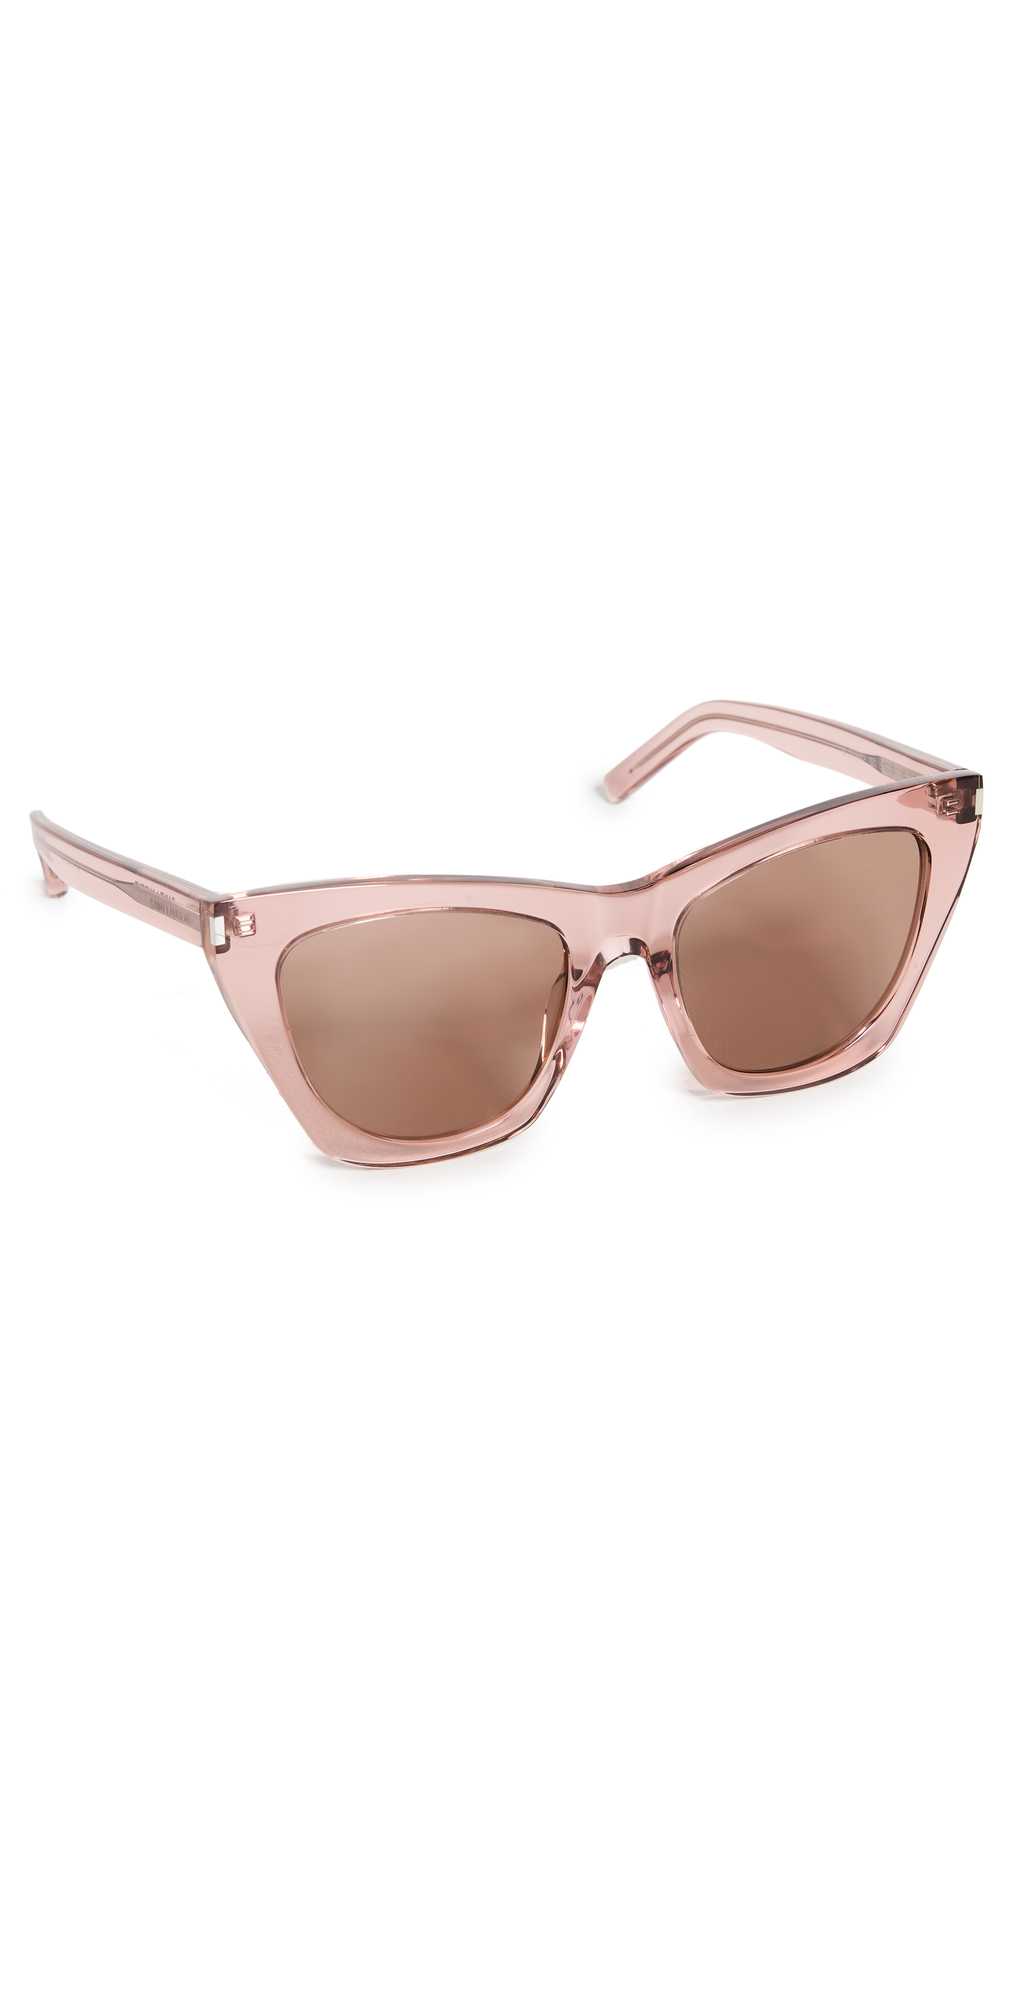 Saint Laurent Kate Sunglasses in brown / pink